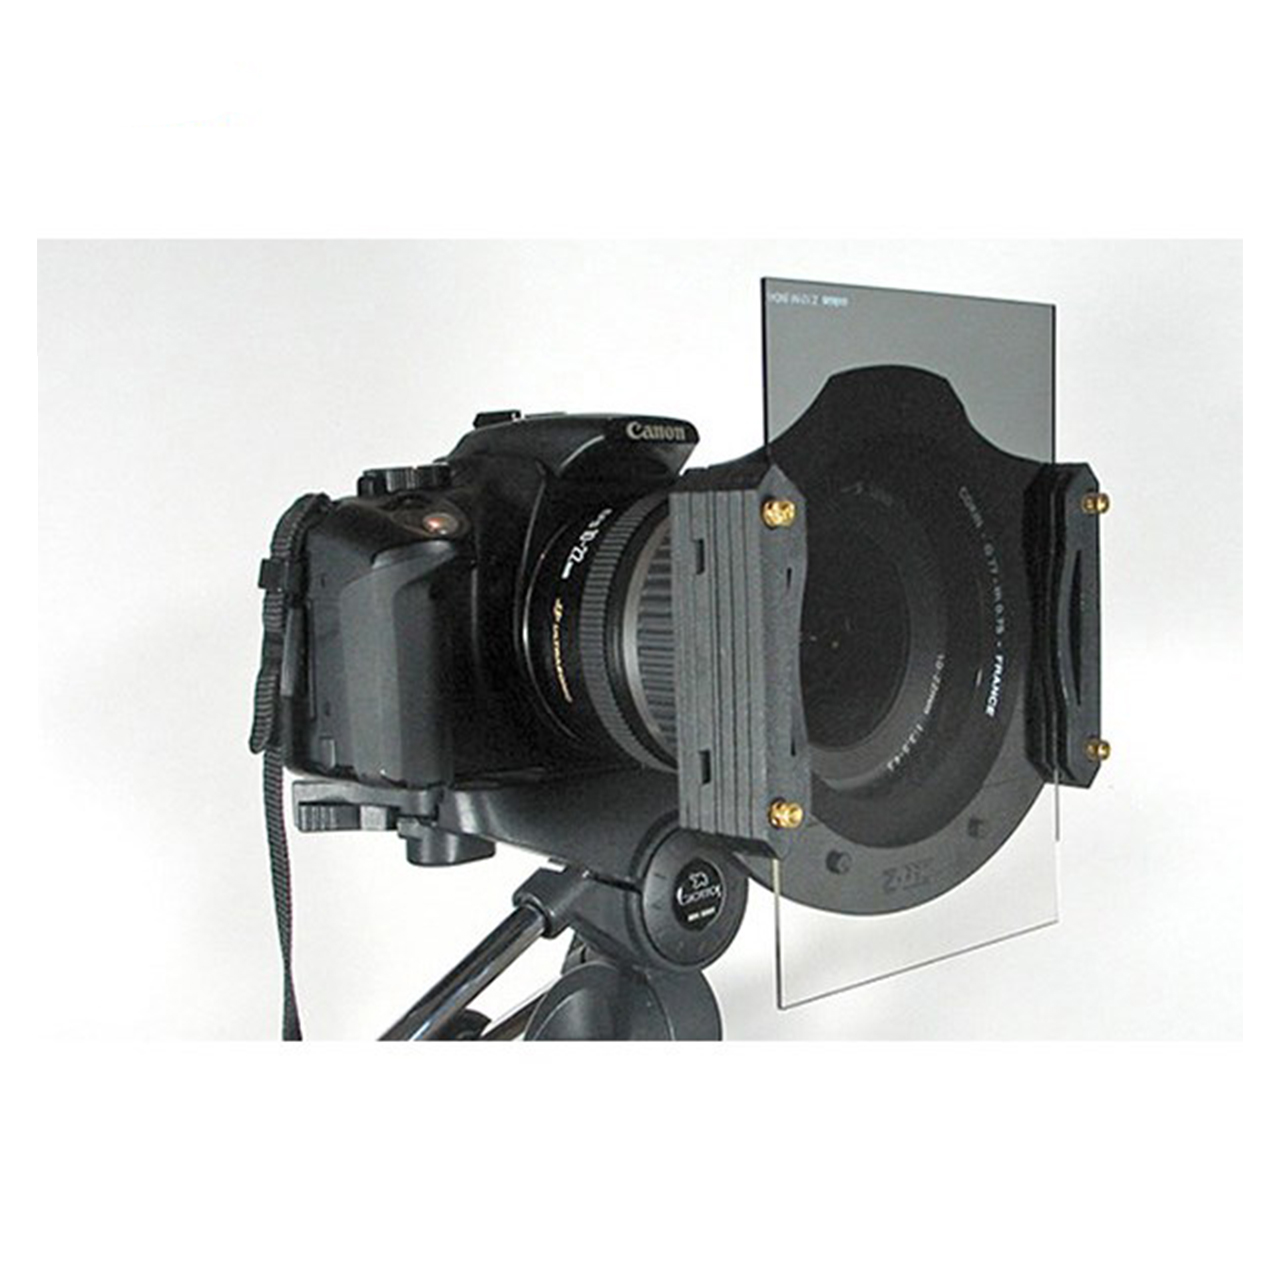 نگهدارنده فیلتر لنز کوکین مدل BZ-100A سری Z پرو